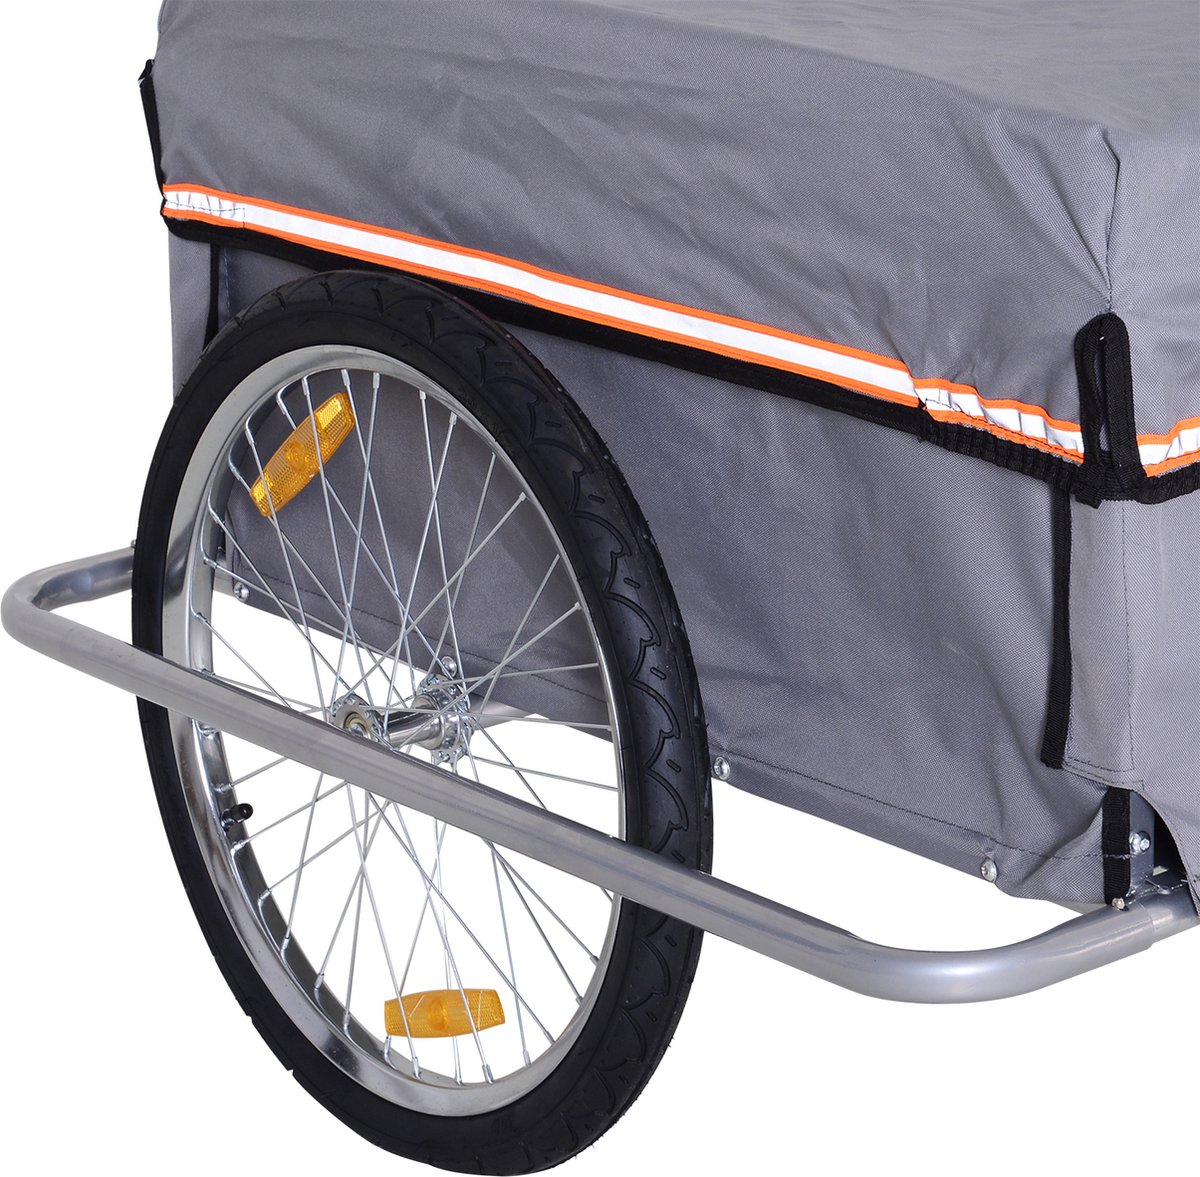 Homcom - Remorque vélo remorque de transport pour vélo pliable 70L